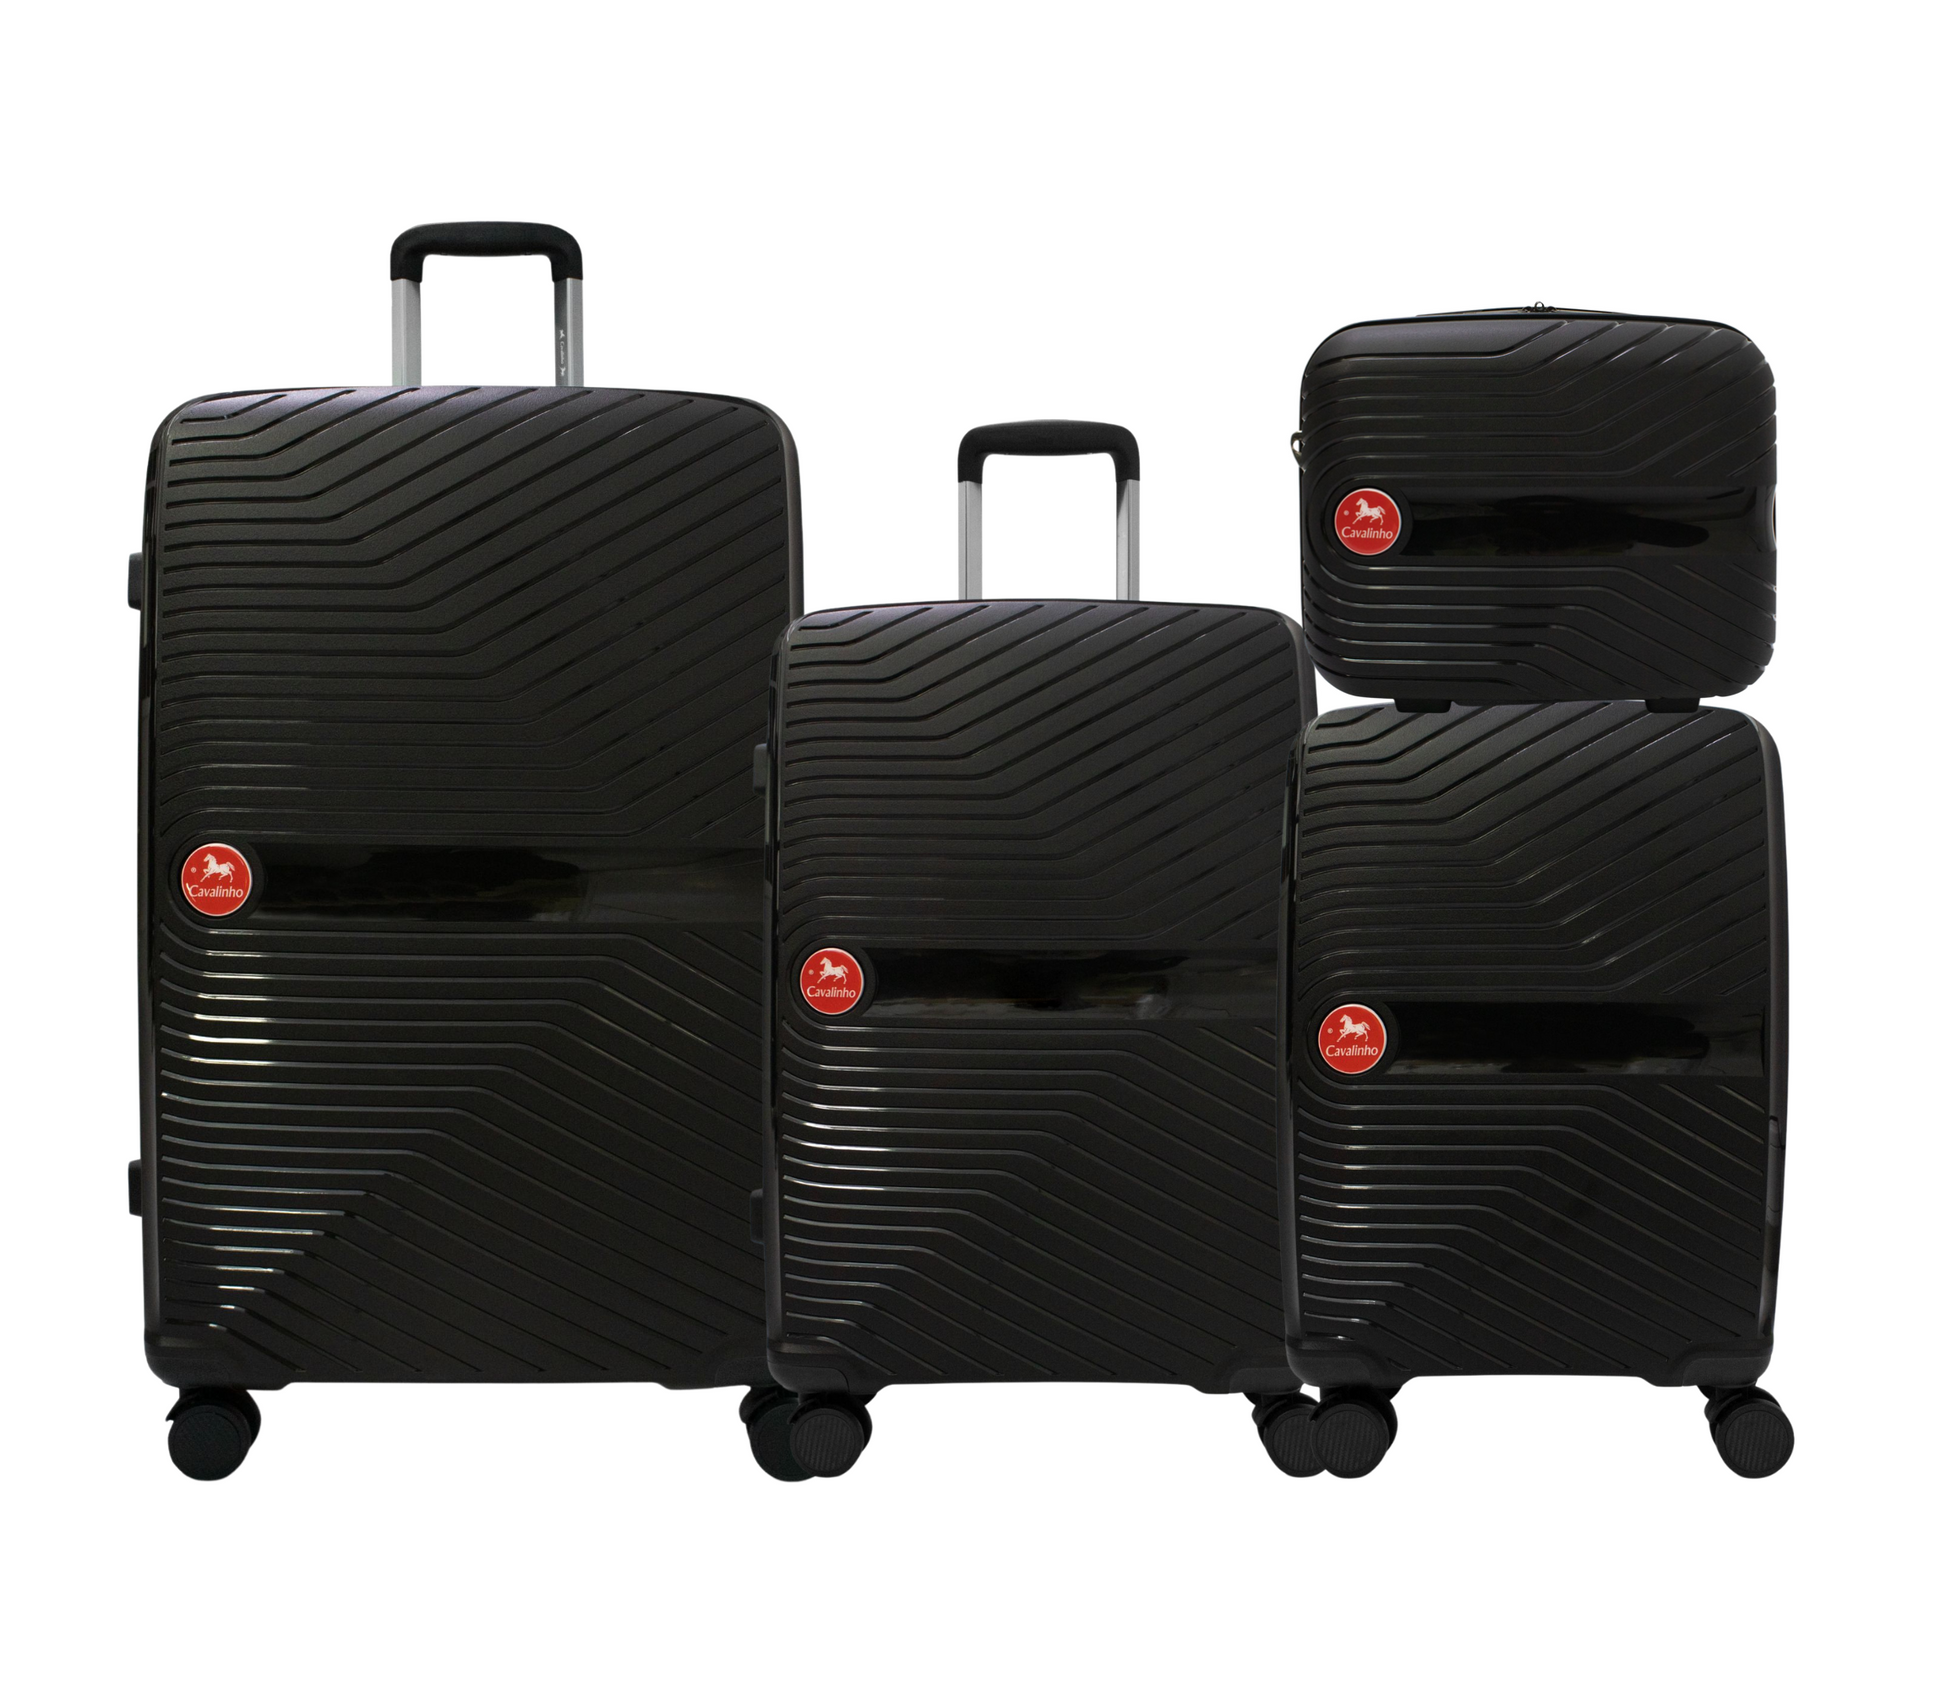 #color_ Black | Cavalinho Canada & USA 4 Piece Set of Colorful Hardside Luggage (15", 19", 24", 28") - Black - 68020004.01.S4_1